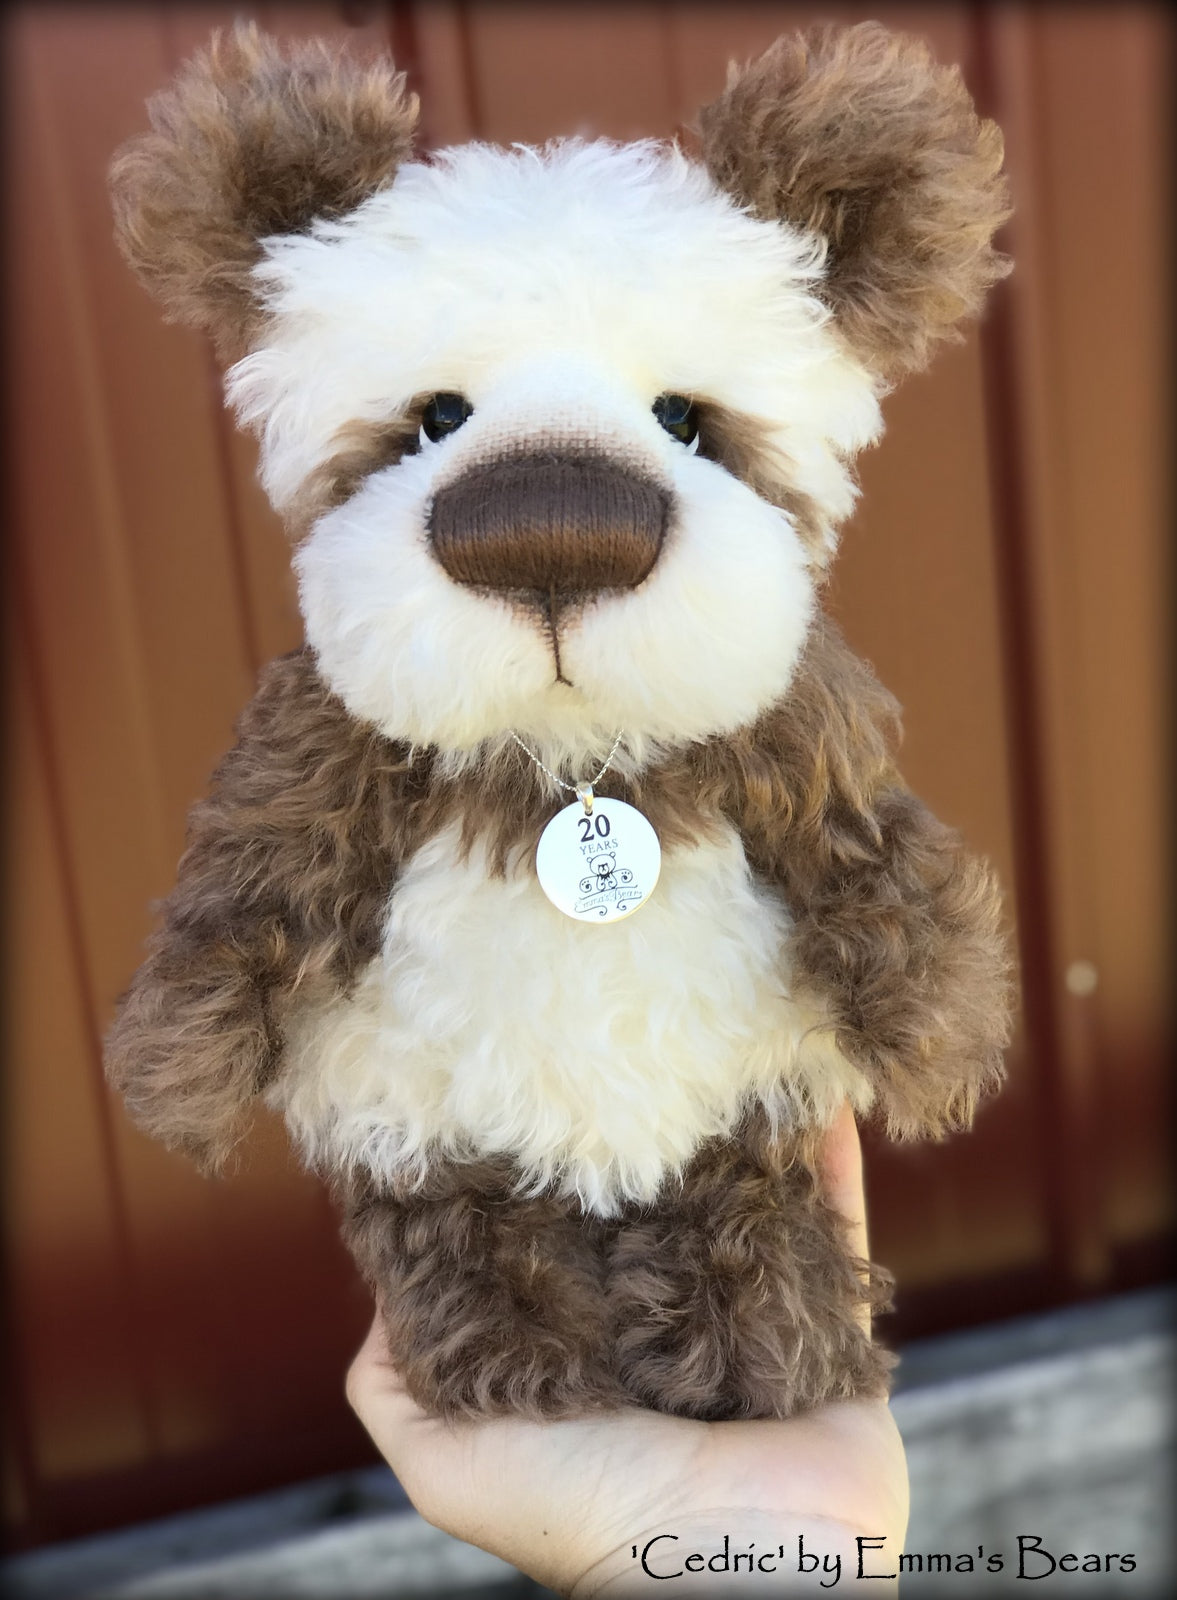 Cedric - 20 Years of Emma's Bears Commemorative Teddy - OOAK in a series